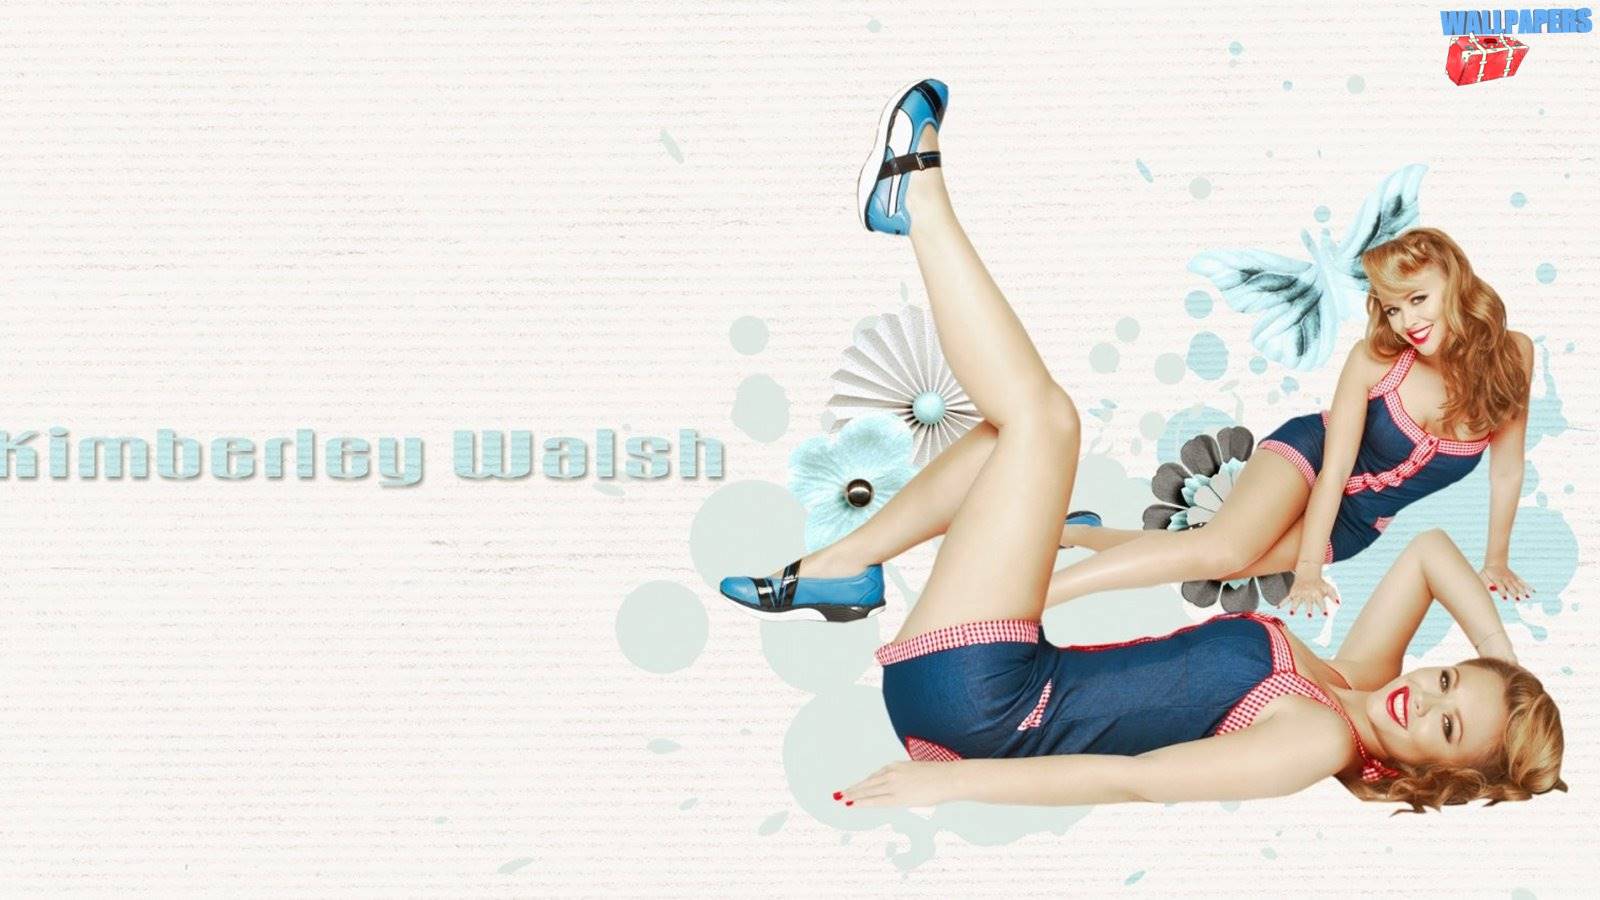 Kimberley Walsh Pin Up Girl Wallpaper - Imogen Thomas Premiership Footballer - HD Wallpaper 